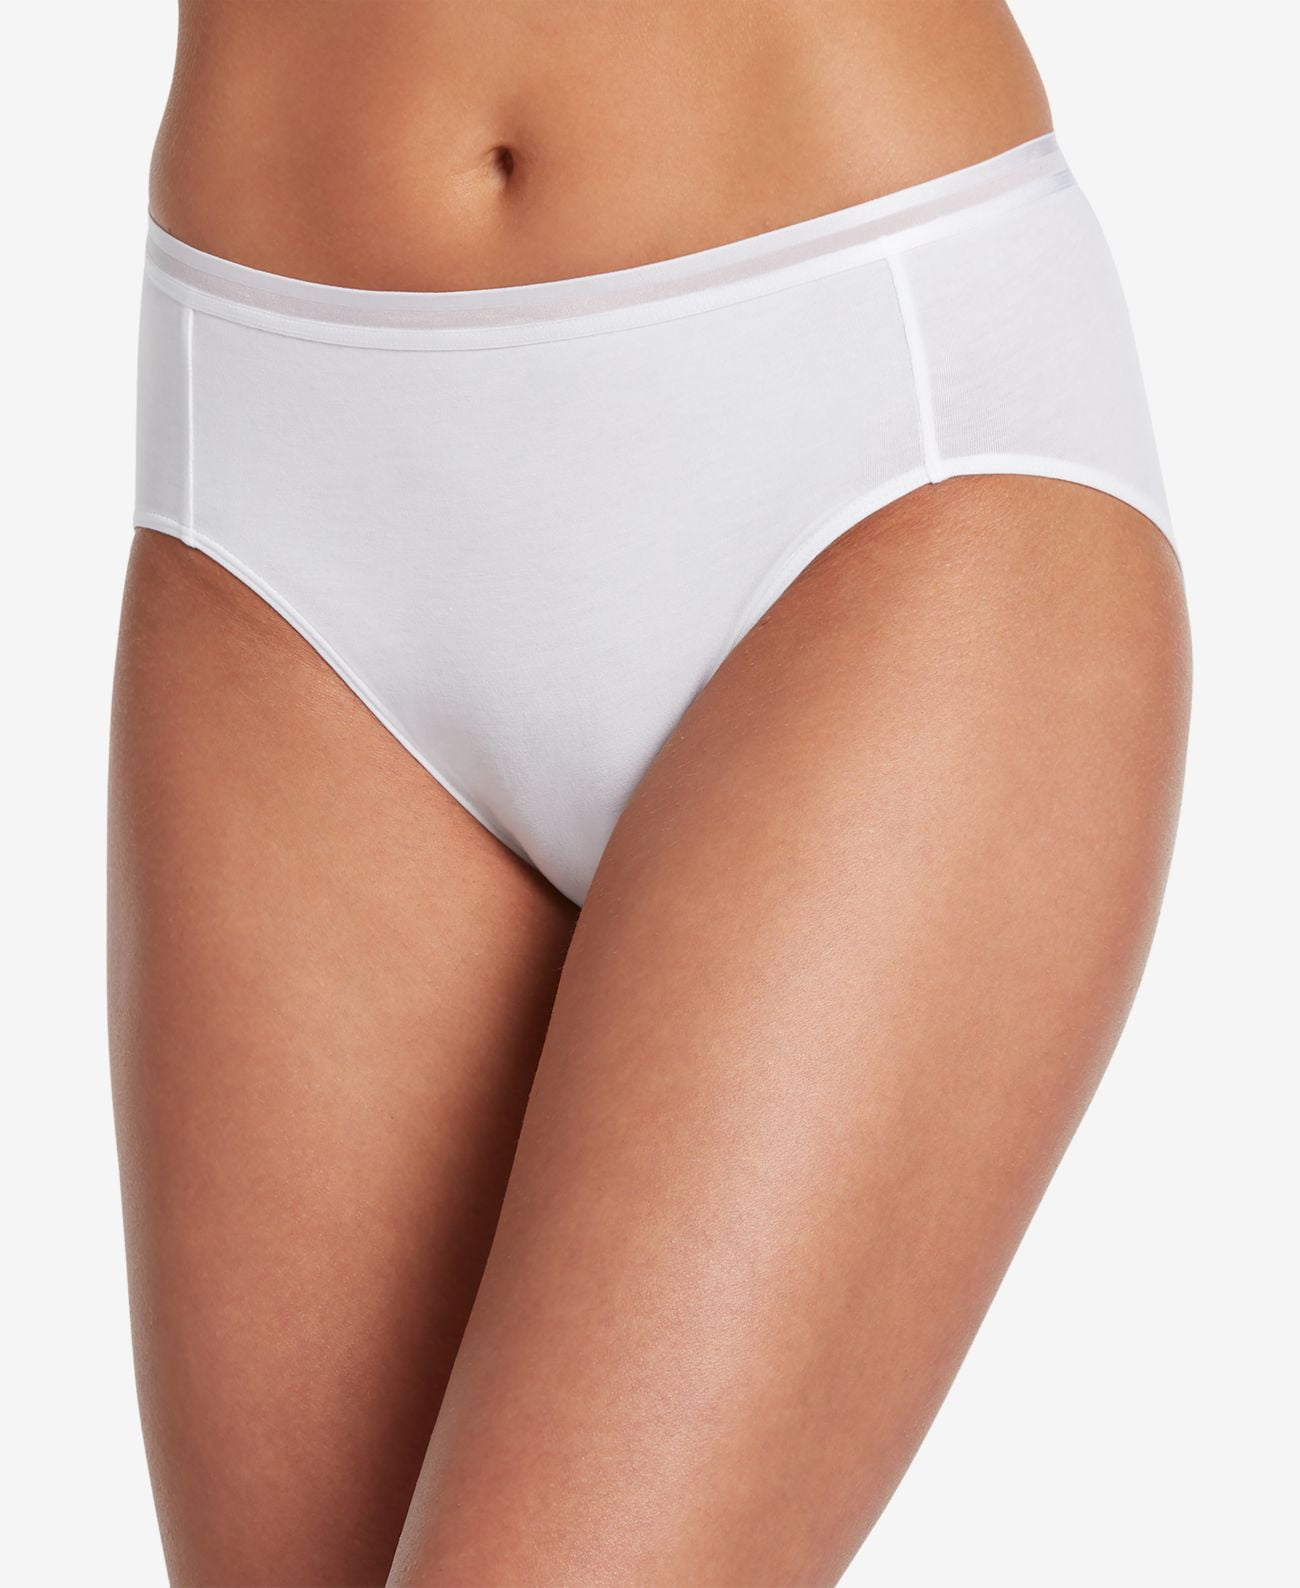 Jockey Women's Underwear Cotton Allure Hi Cut, White, XX-Large 